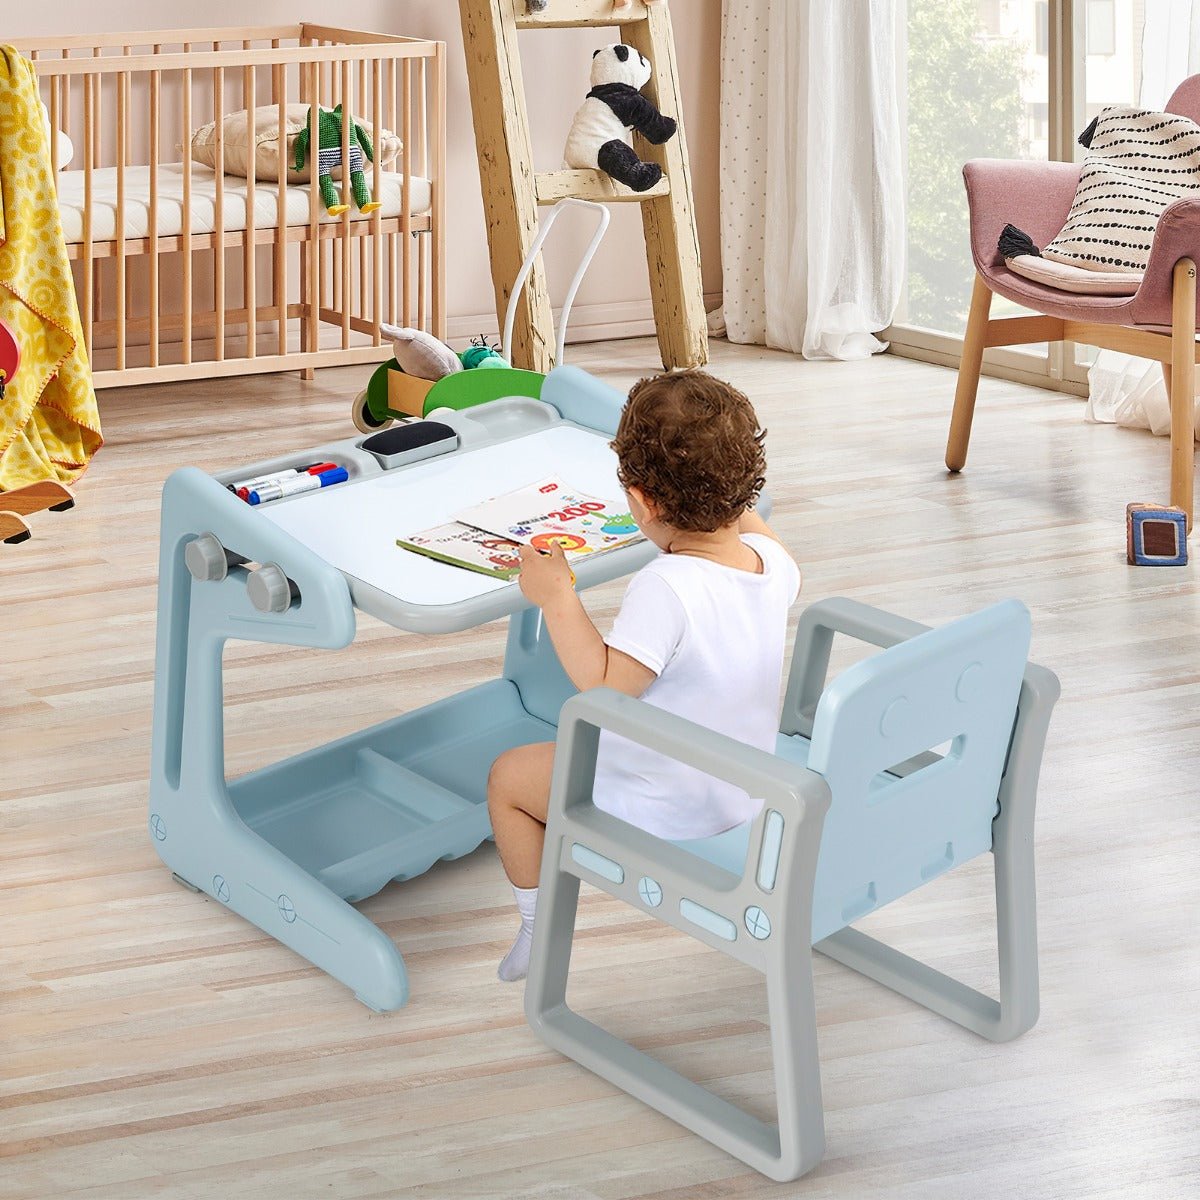 Kids Art Table - Abundant Storage for Little Picassos